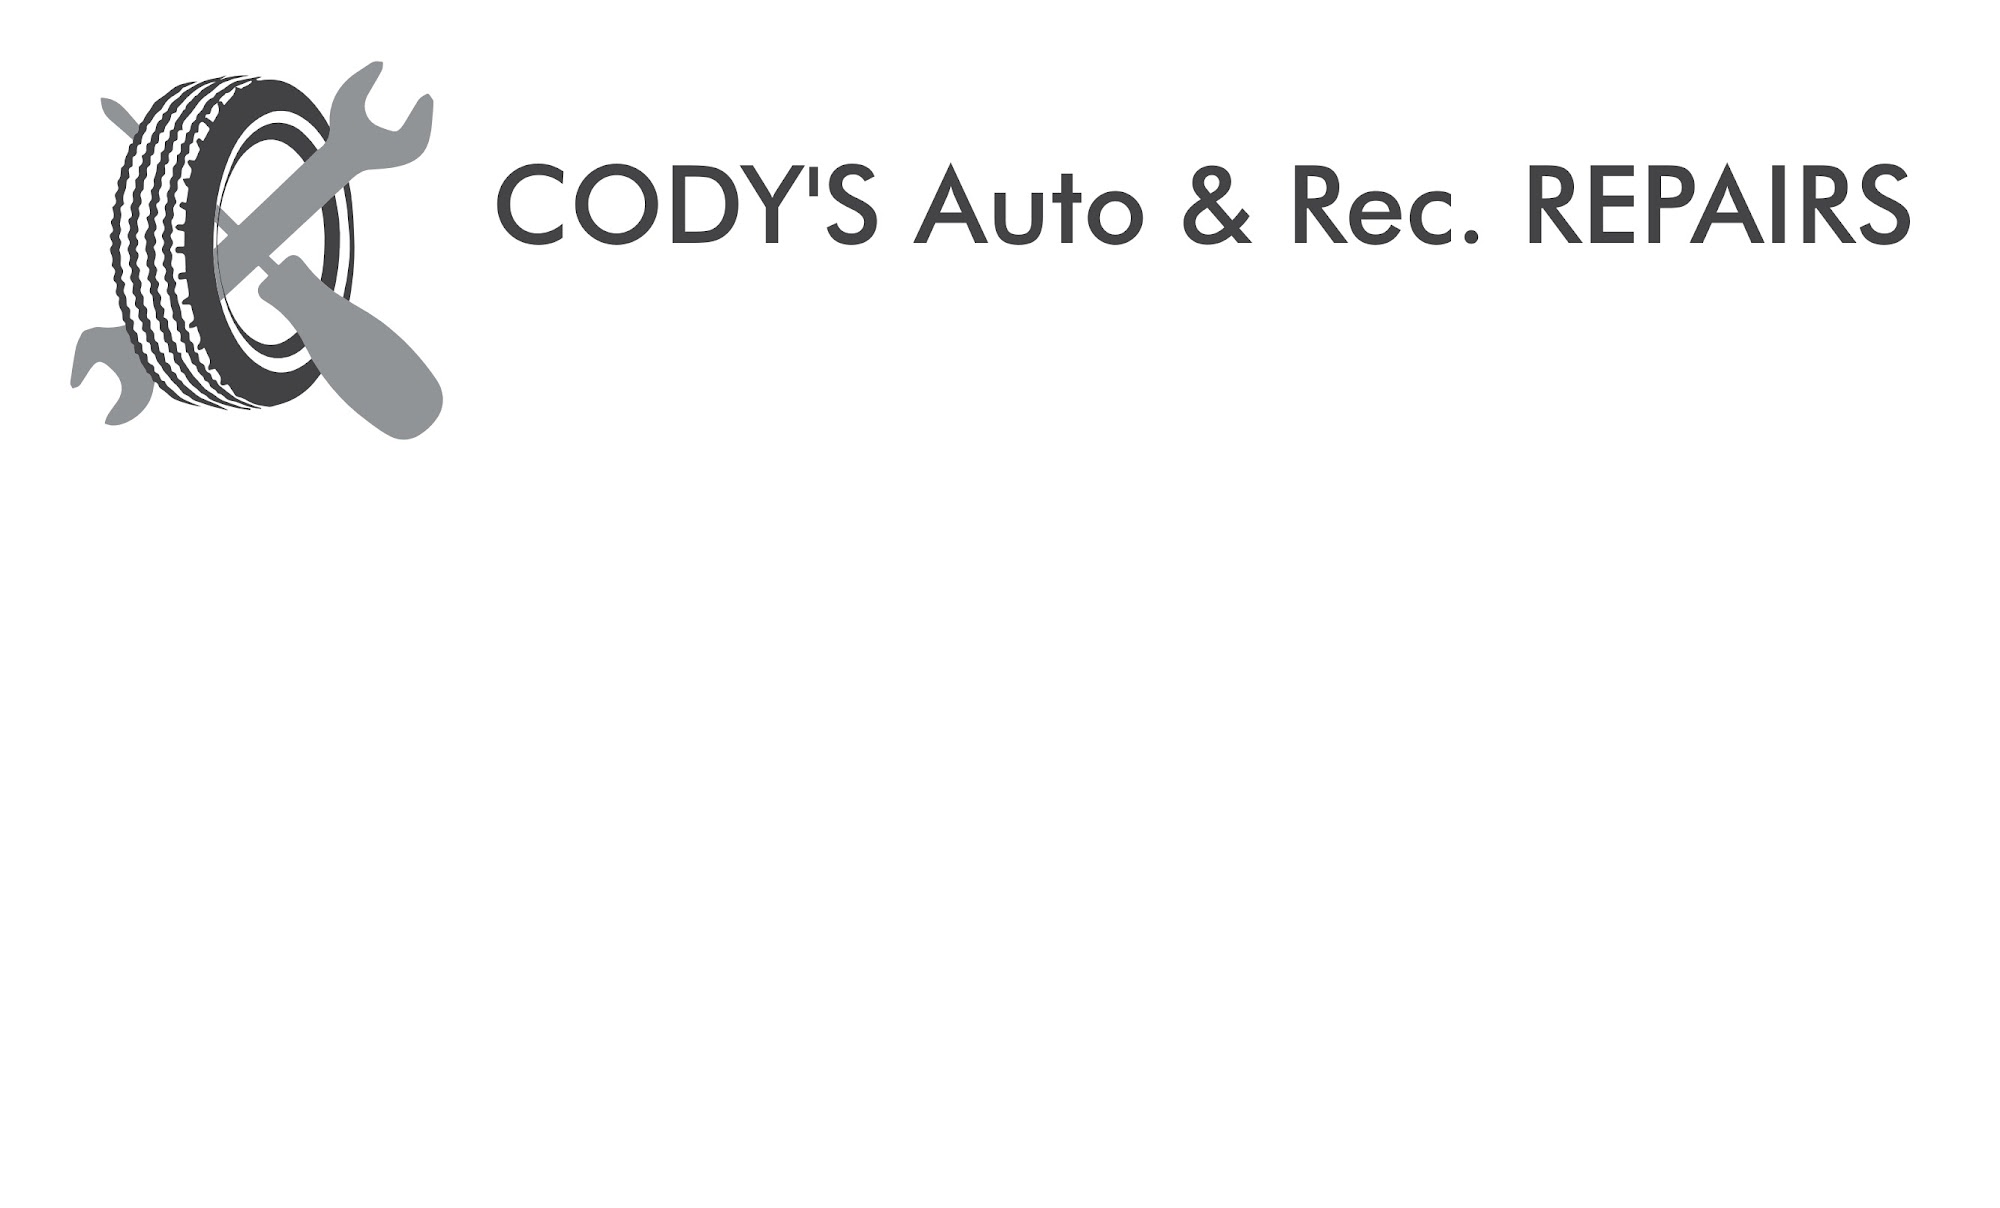 Cody’s Auto & Rec. Repairs #2 Red Deer Hill Road Box 7, Macdowall Saskatchewan S0K 2S0